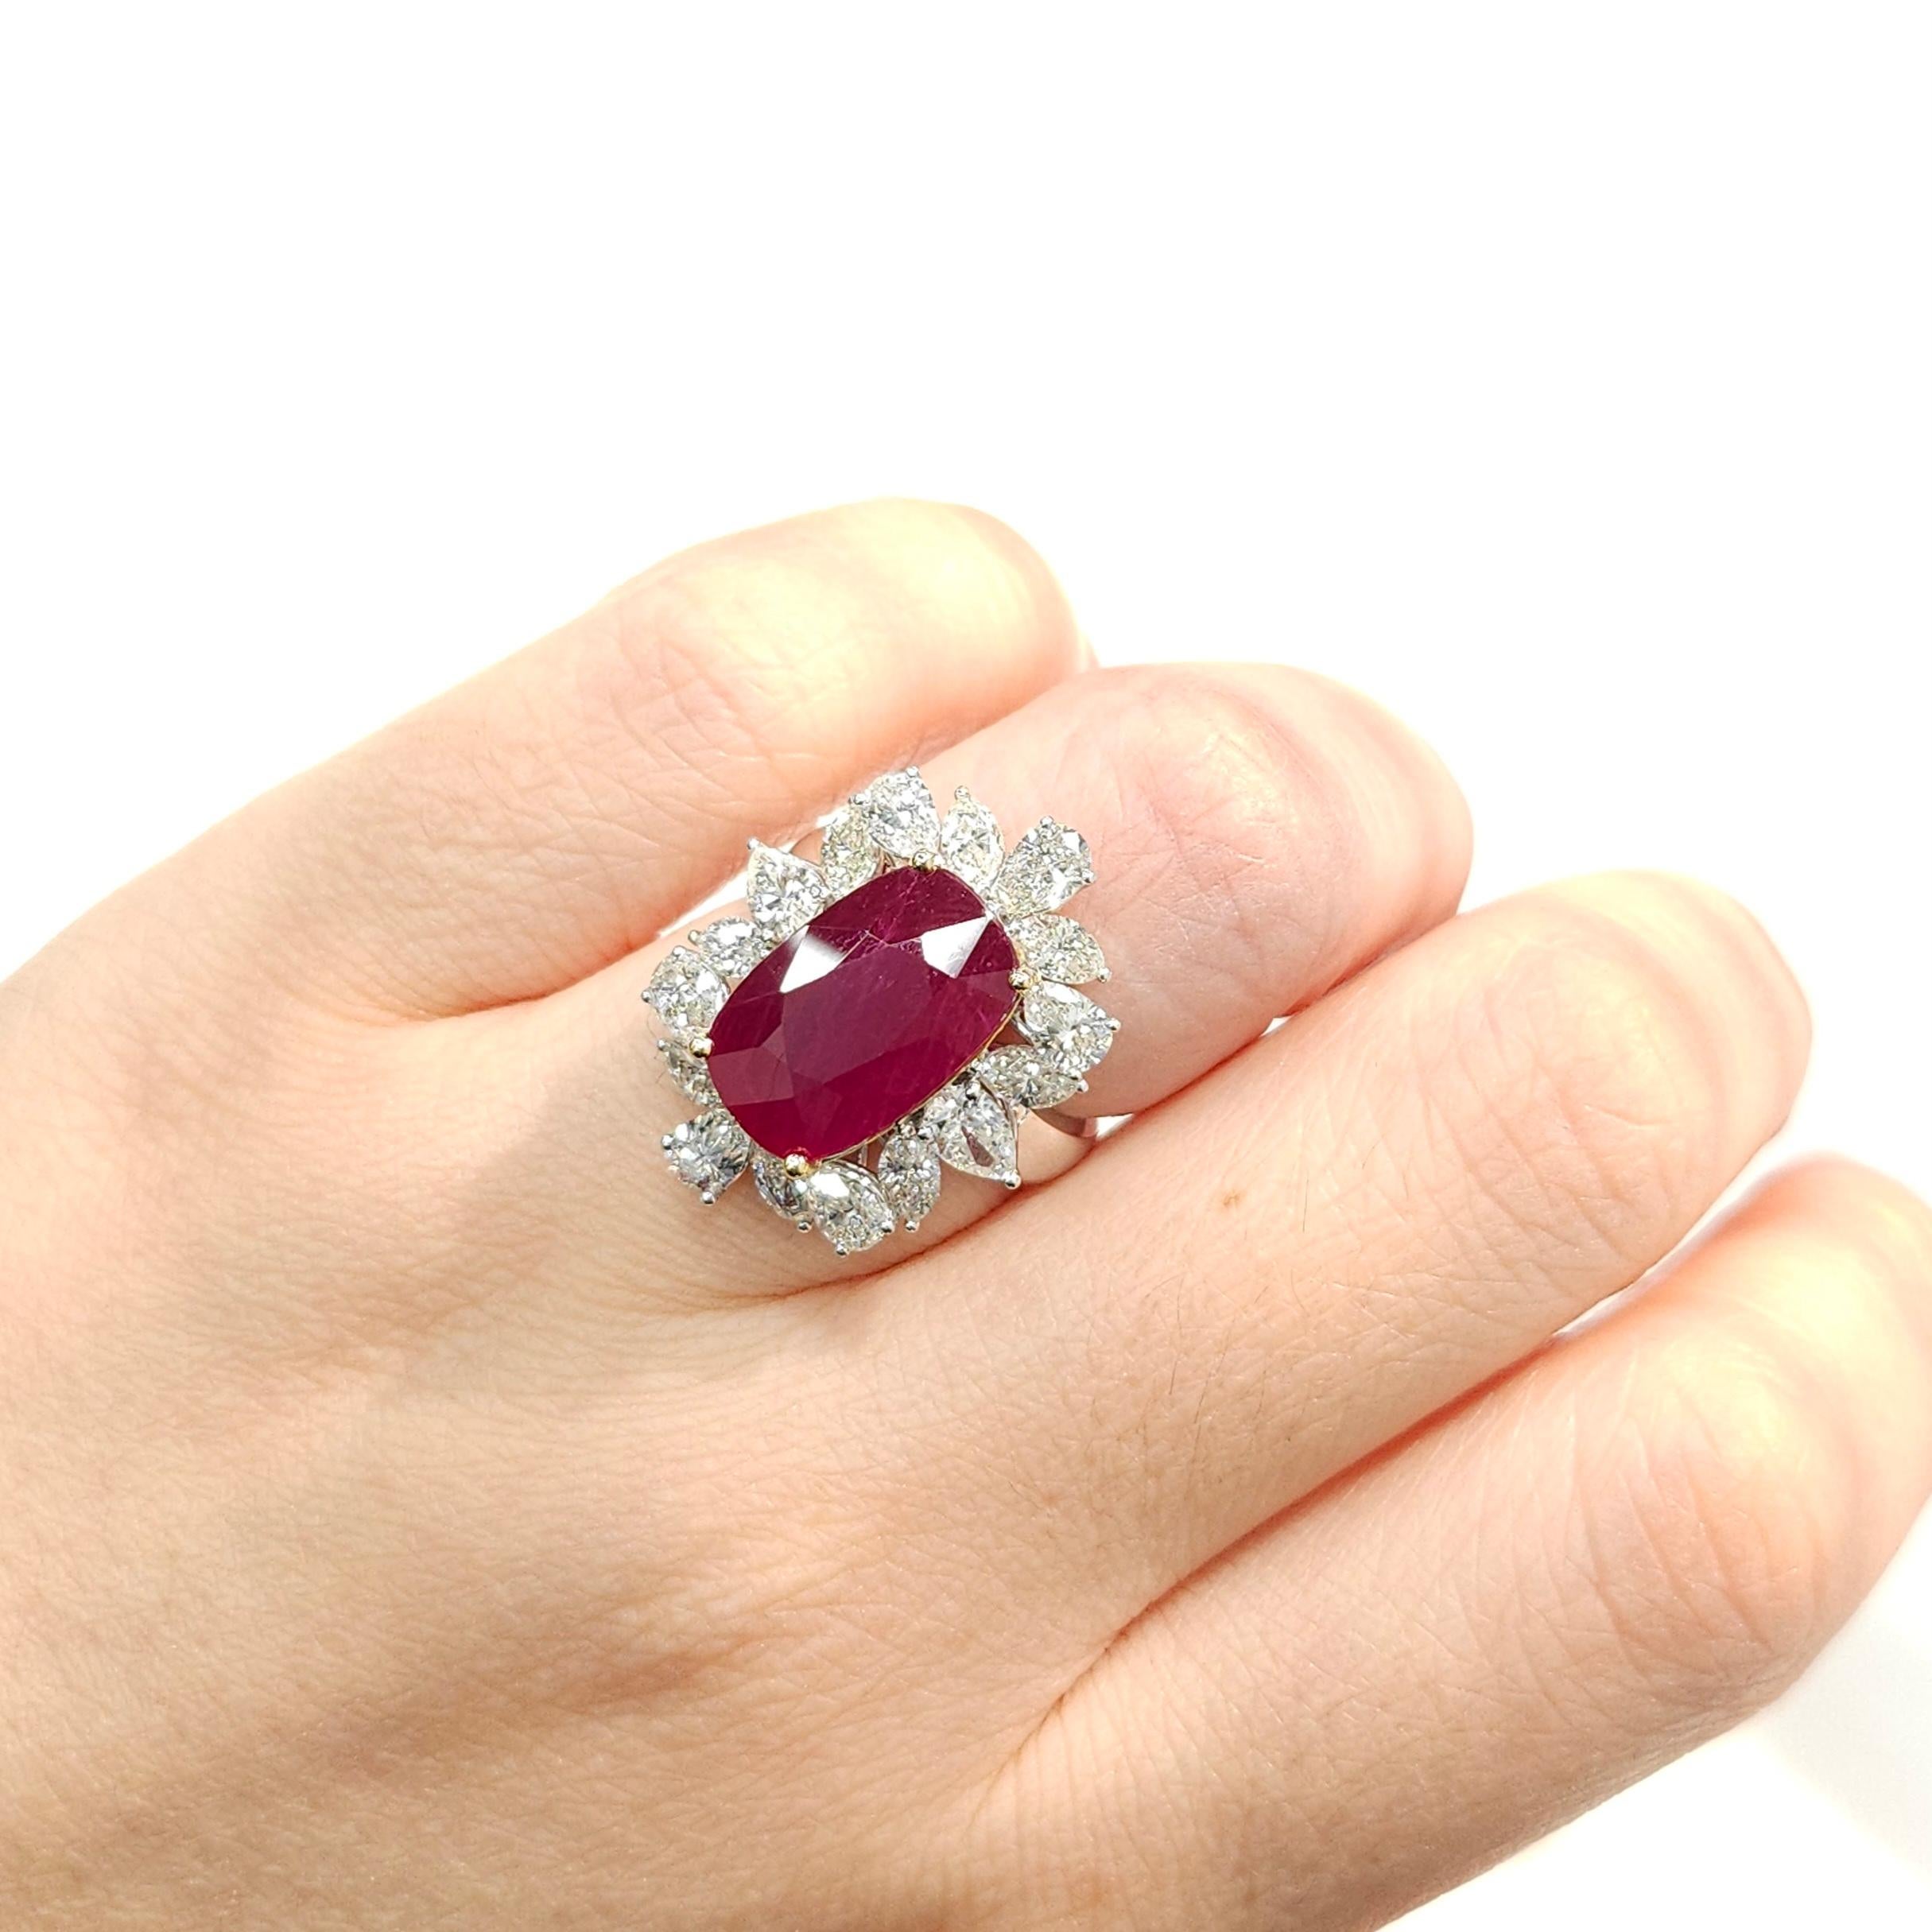 IGI Certified 8.75 Carat Ruby & 3.14 Carat Diamond Ring in 18K White Gold For Sale 7